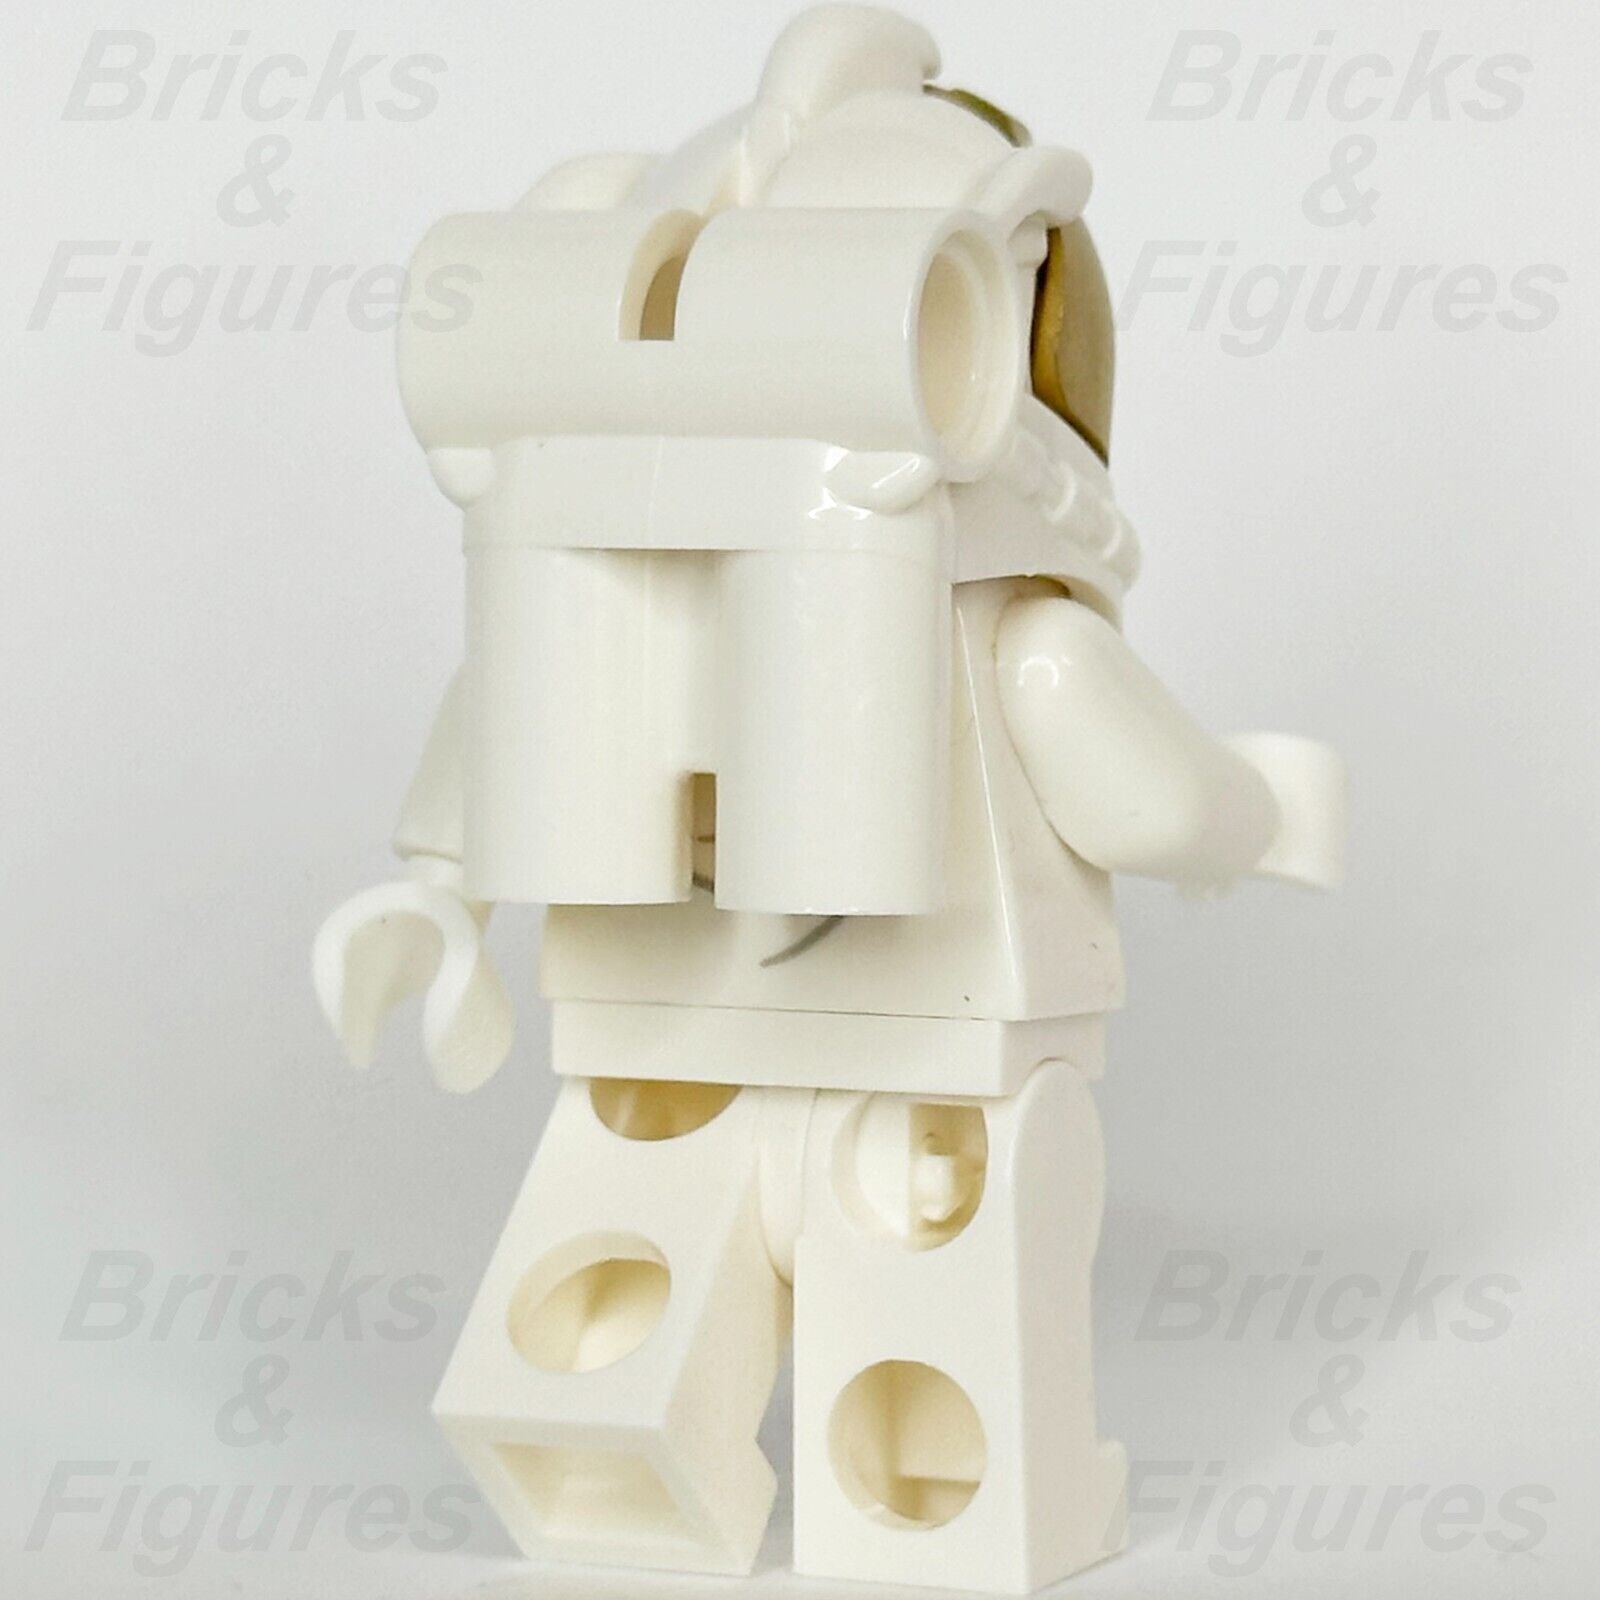 LEGO Creator NASA Apollo 11 Astronaut Minifigure Space Thin Grin 10266 twn374 - Bricks & Figures